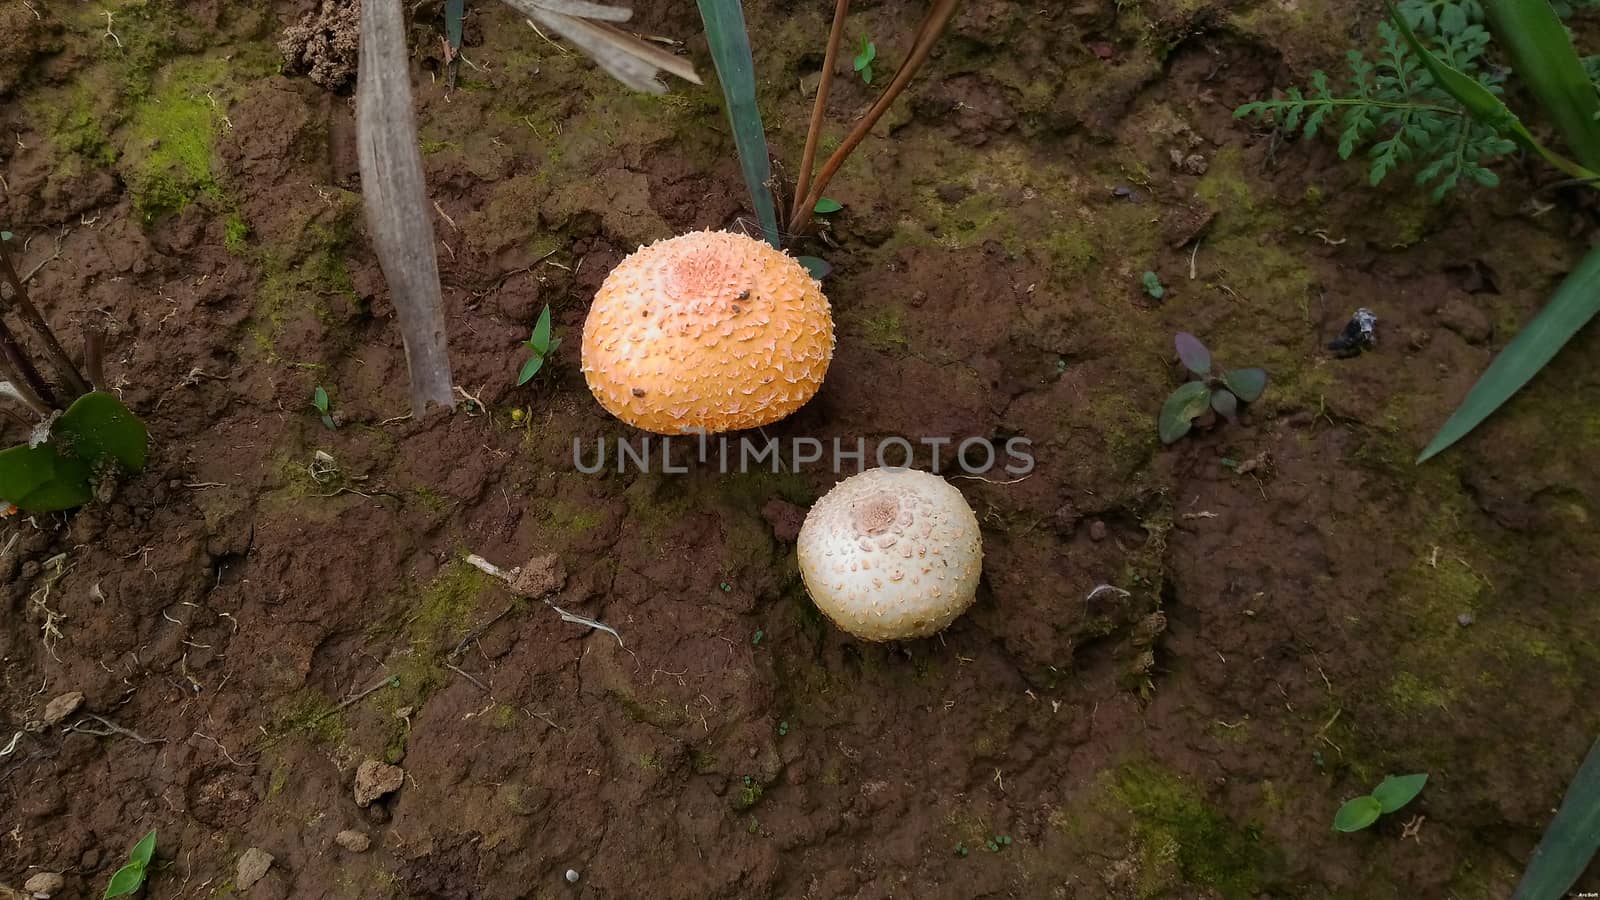 Poison orange mushroom on the floor in the forest